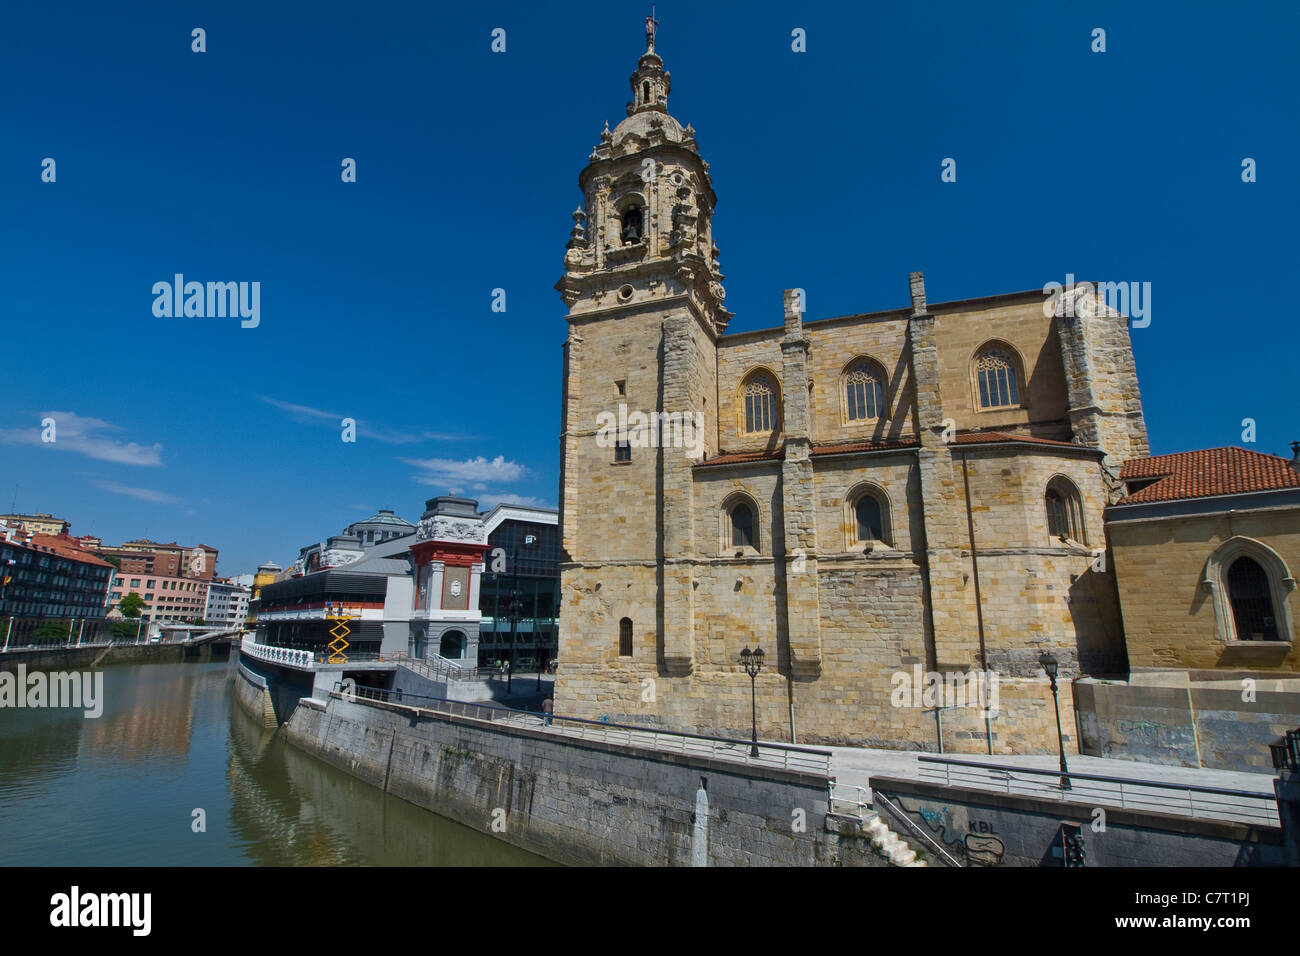 Del siglo XIII, la iglesia de San Anton un mercado antiguo de Bilbao, provincia de Vizcaya, País Vasco, Euskadi, España, Europa. Foto de stock